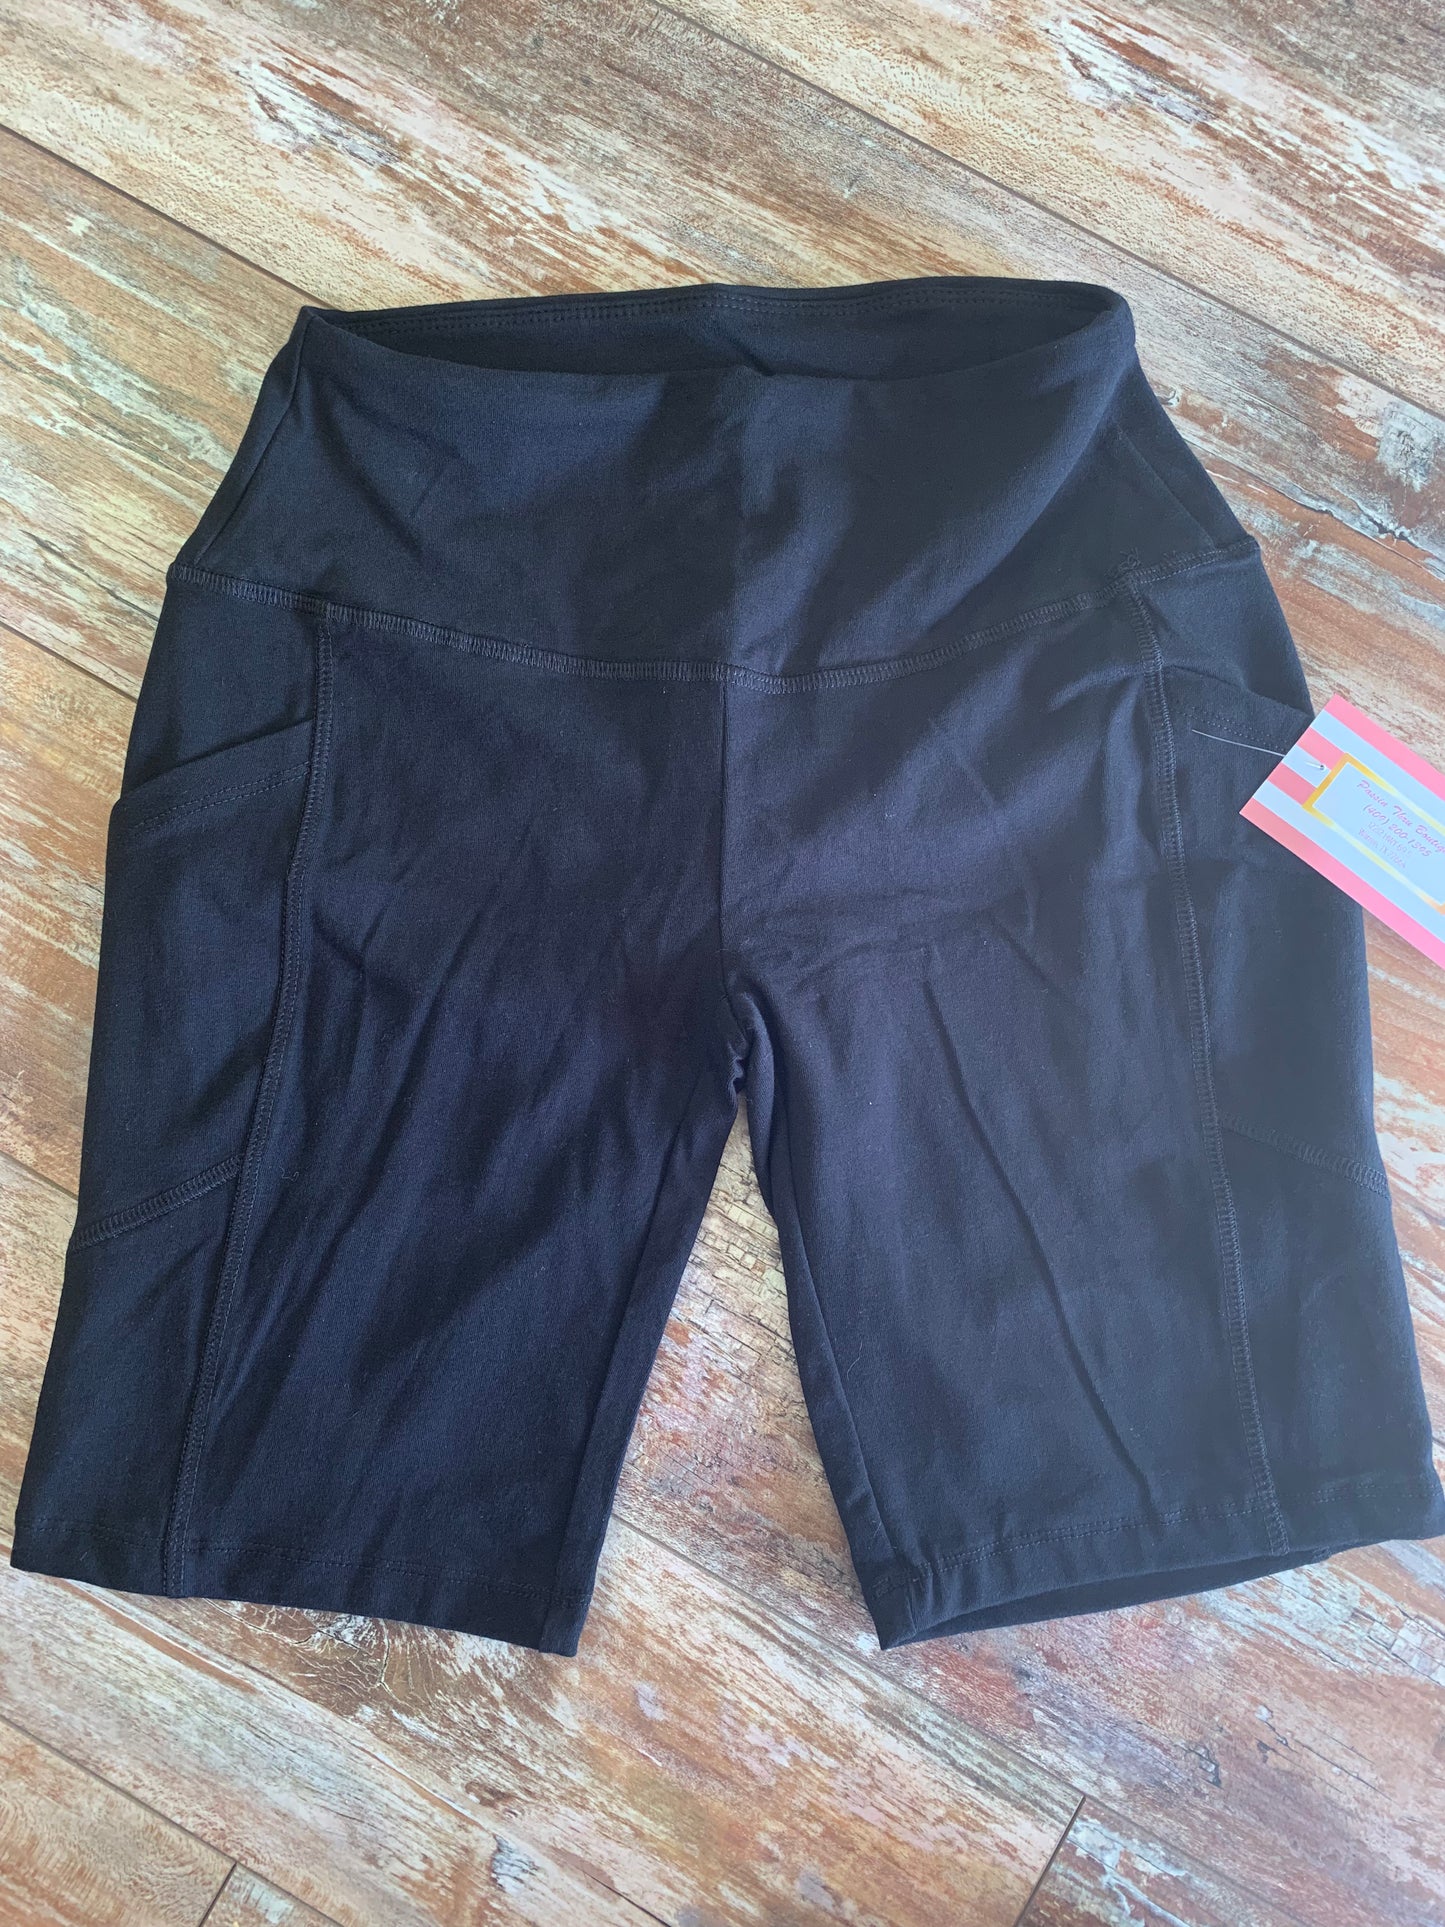 Black Cotton Biker Shorts With Pockets